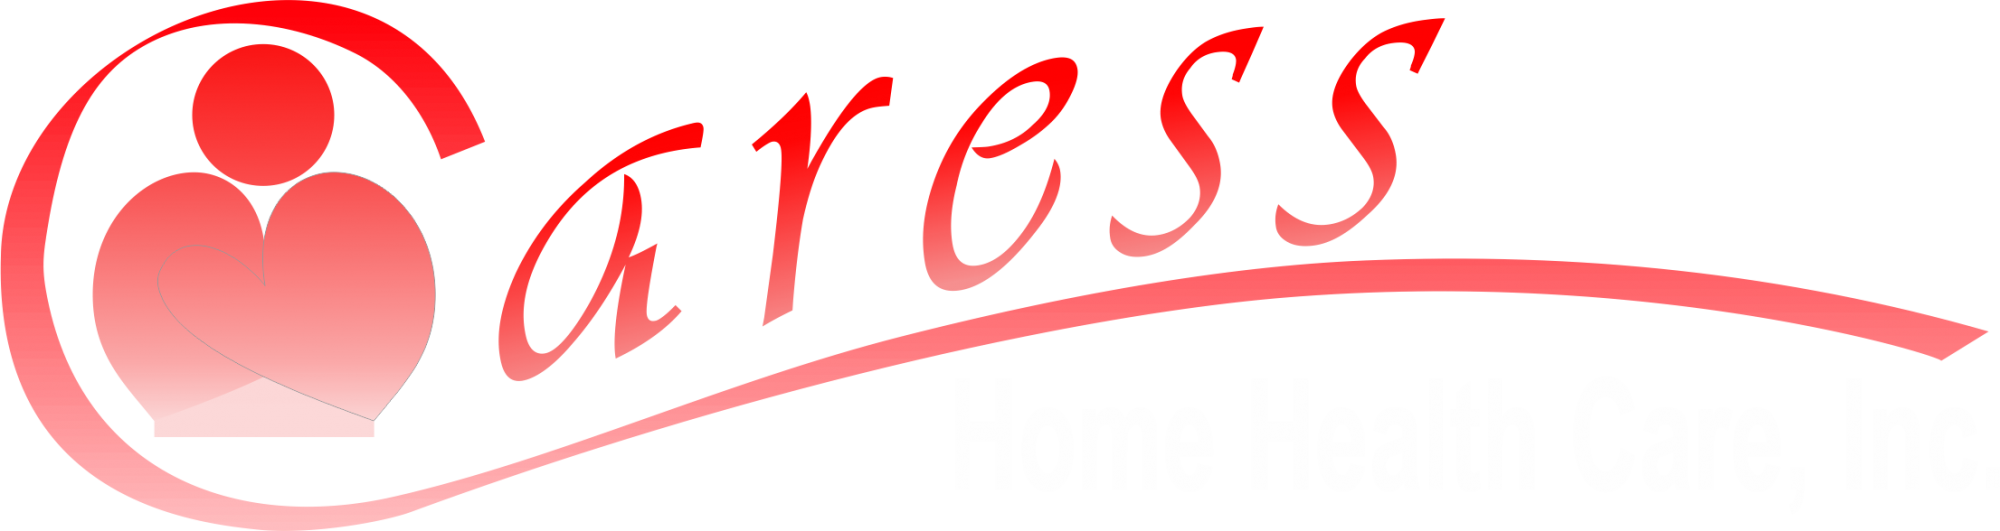 JOB POSTINGS – Caress Home Health Care, Inc.